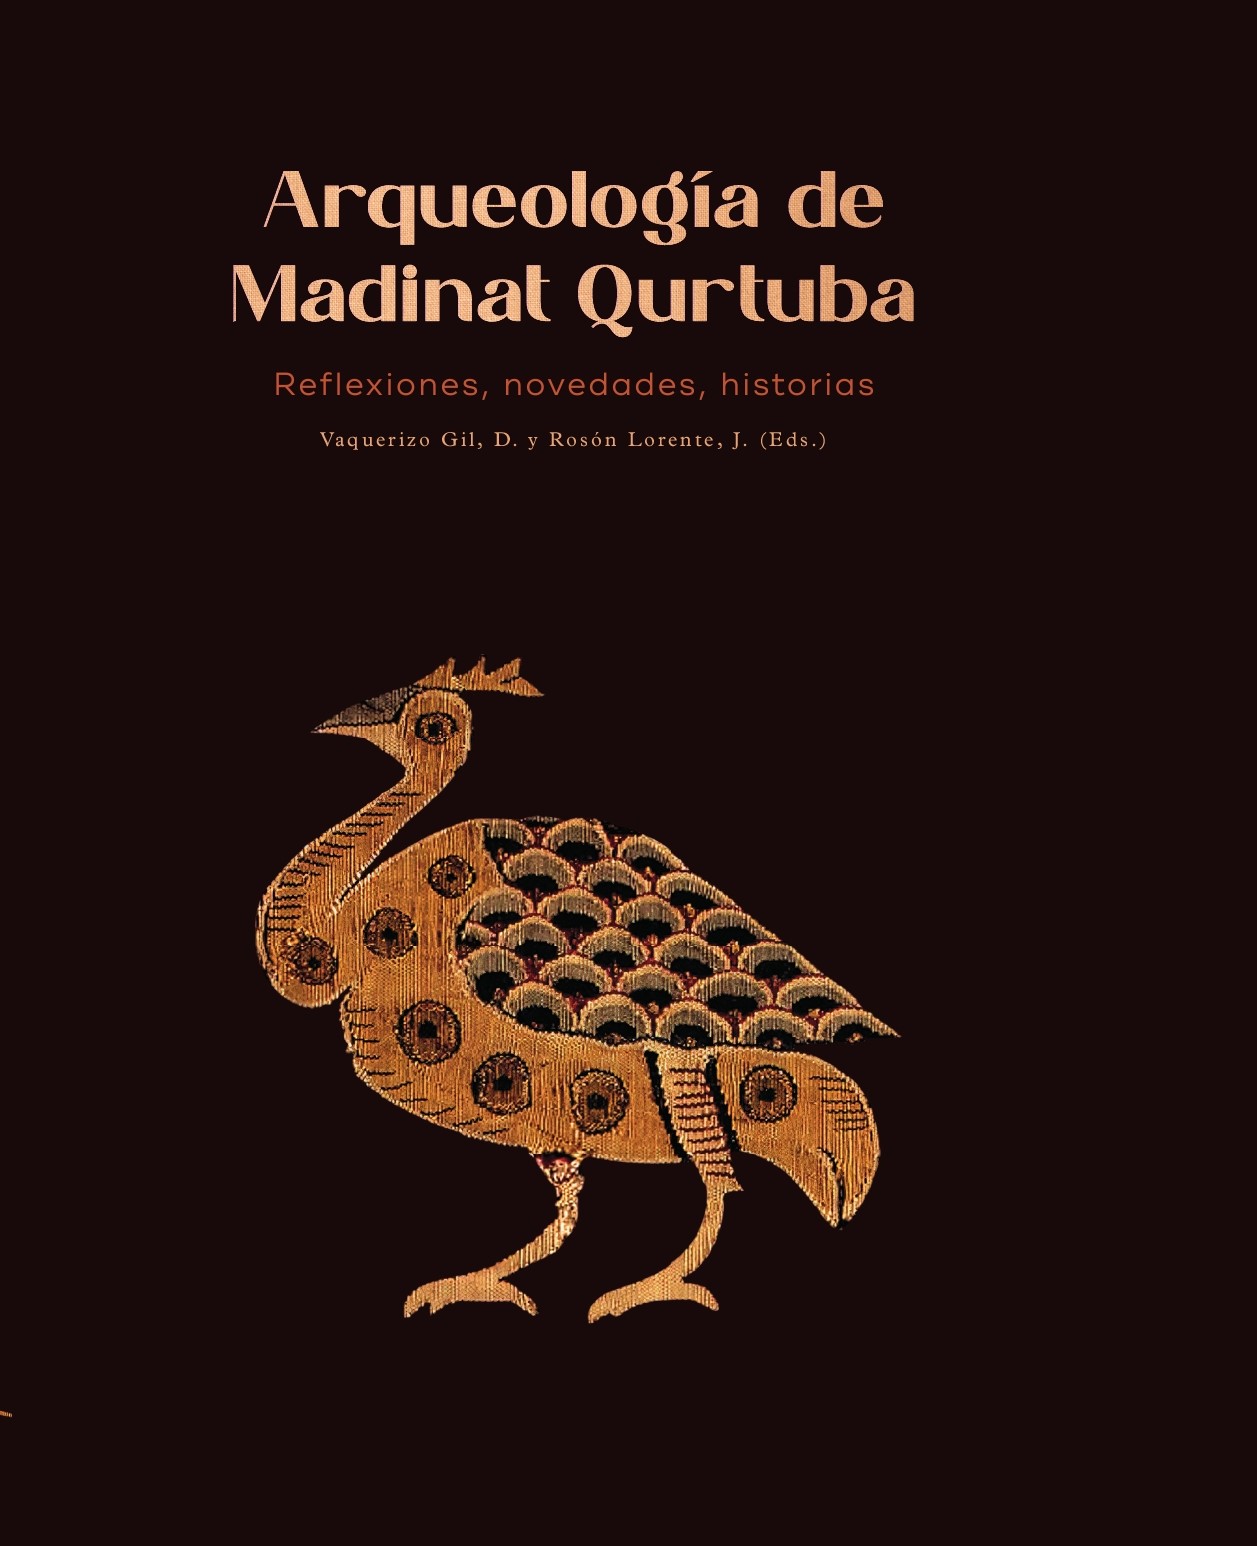 Arqueologia de Madinat Qurtuba1.jpg